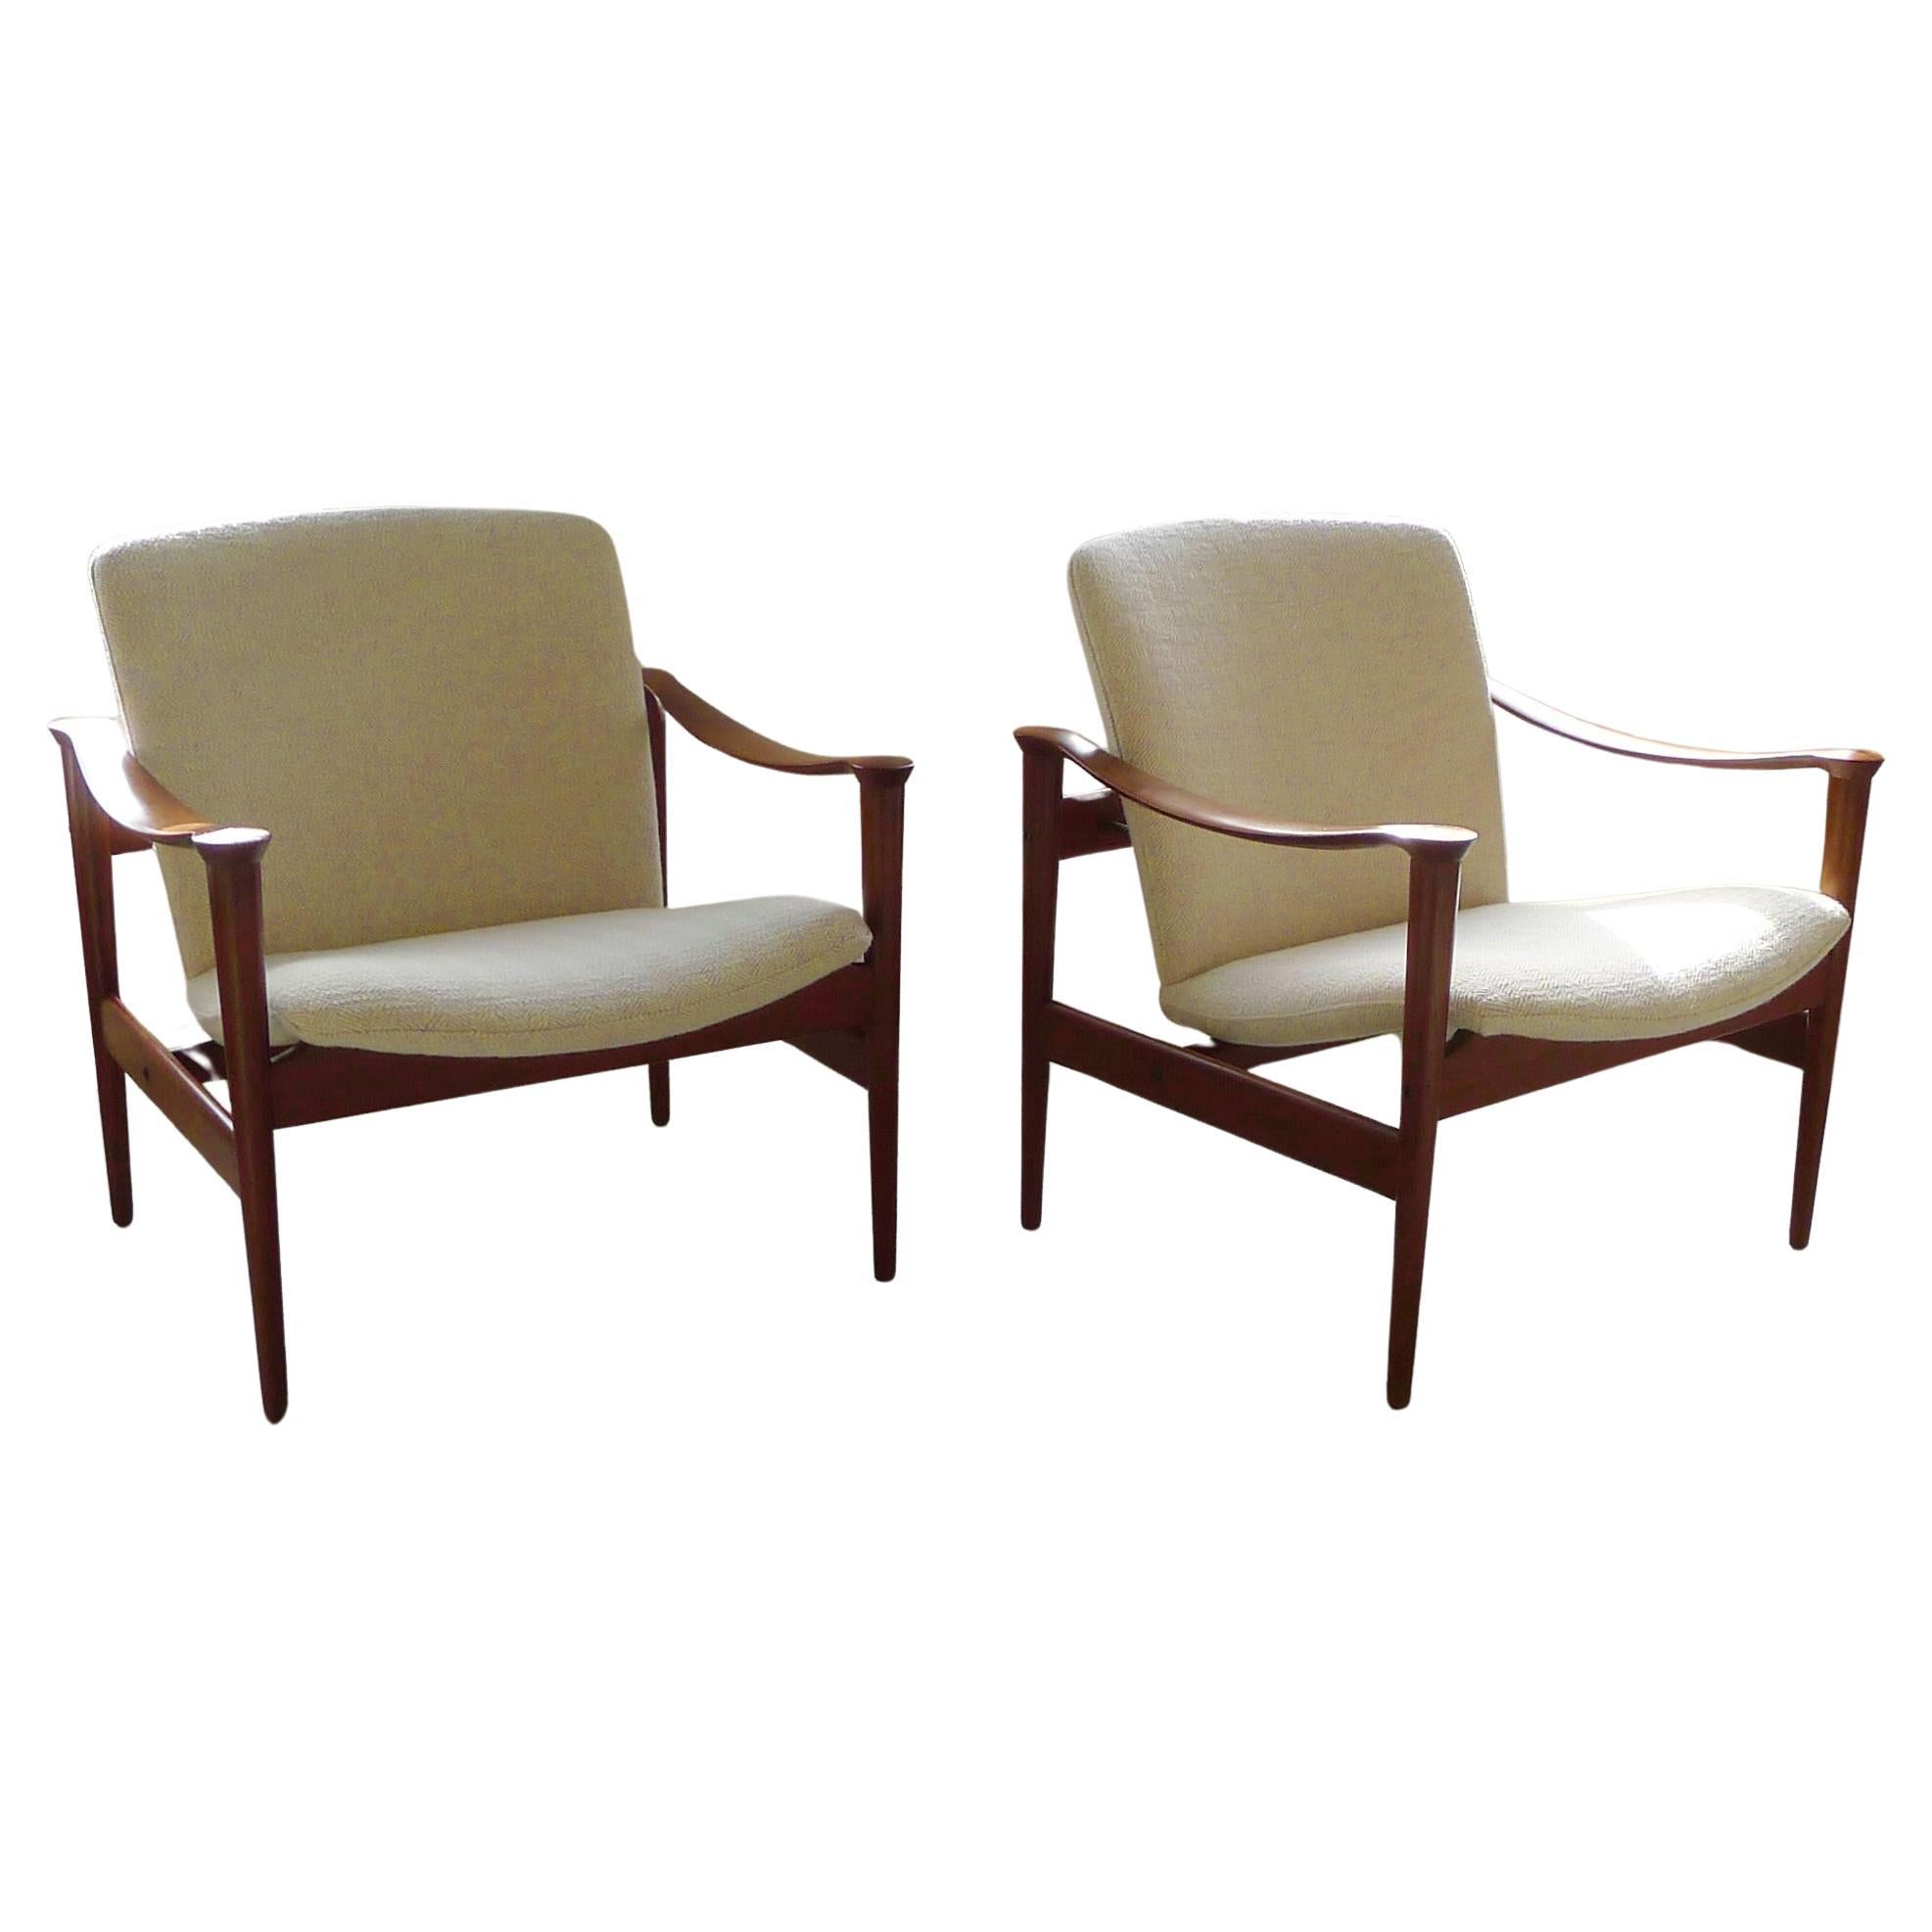 Fredrik Kayser, Pair of Teak Lounge Chairs, Model 711, Norwegian circa 1960 For Sale